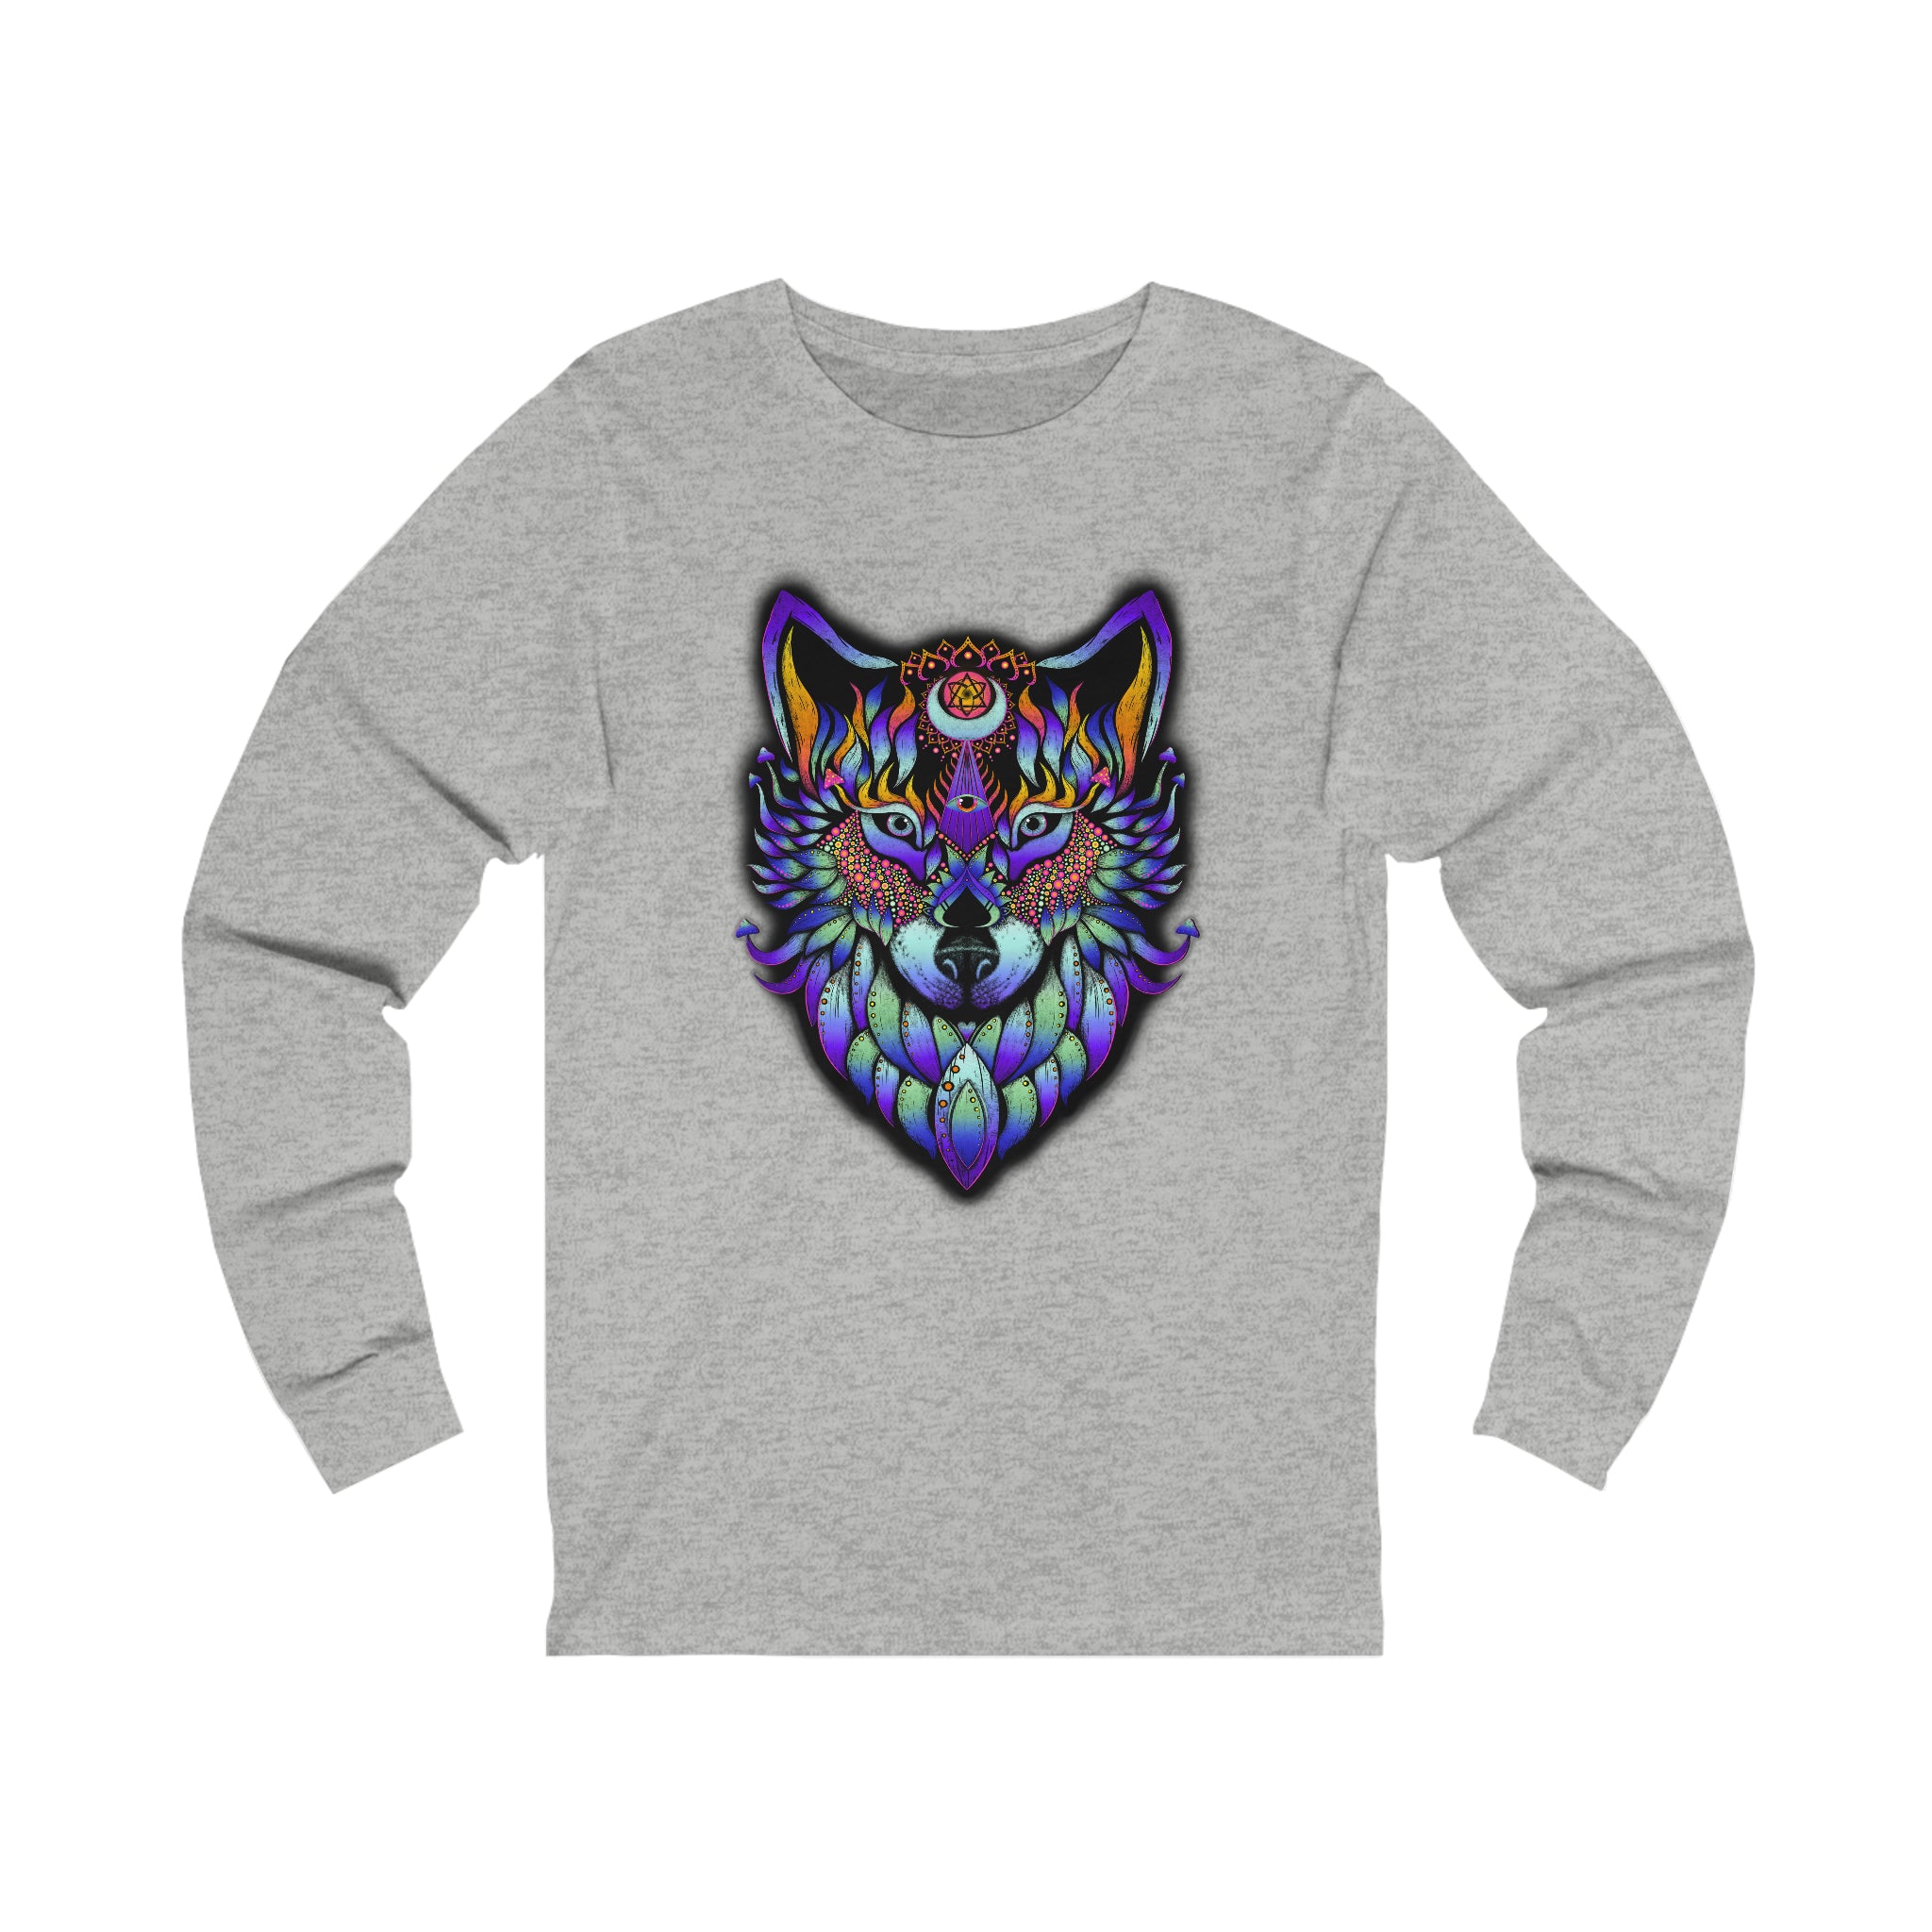 Wolf Long Sleeve Shirt